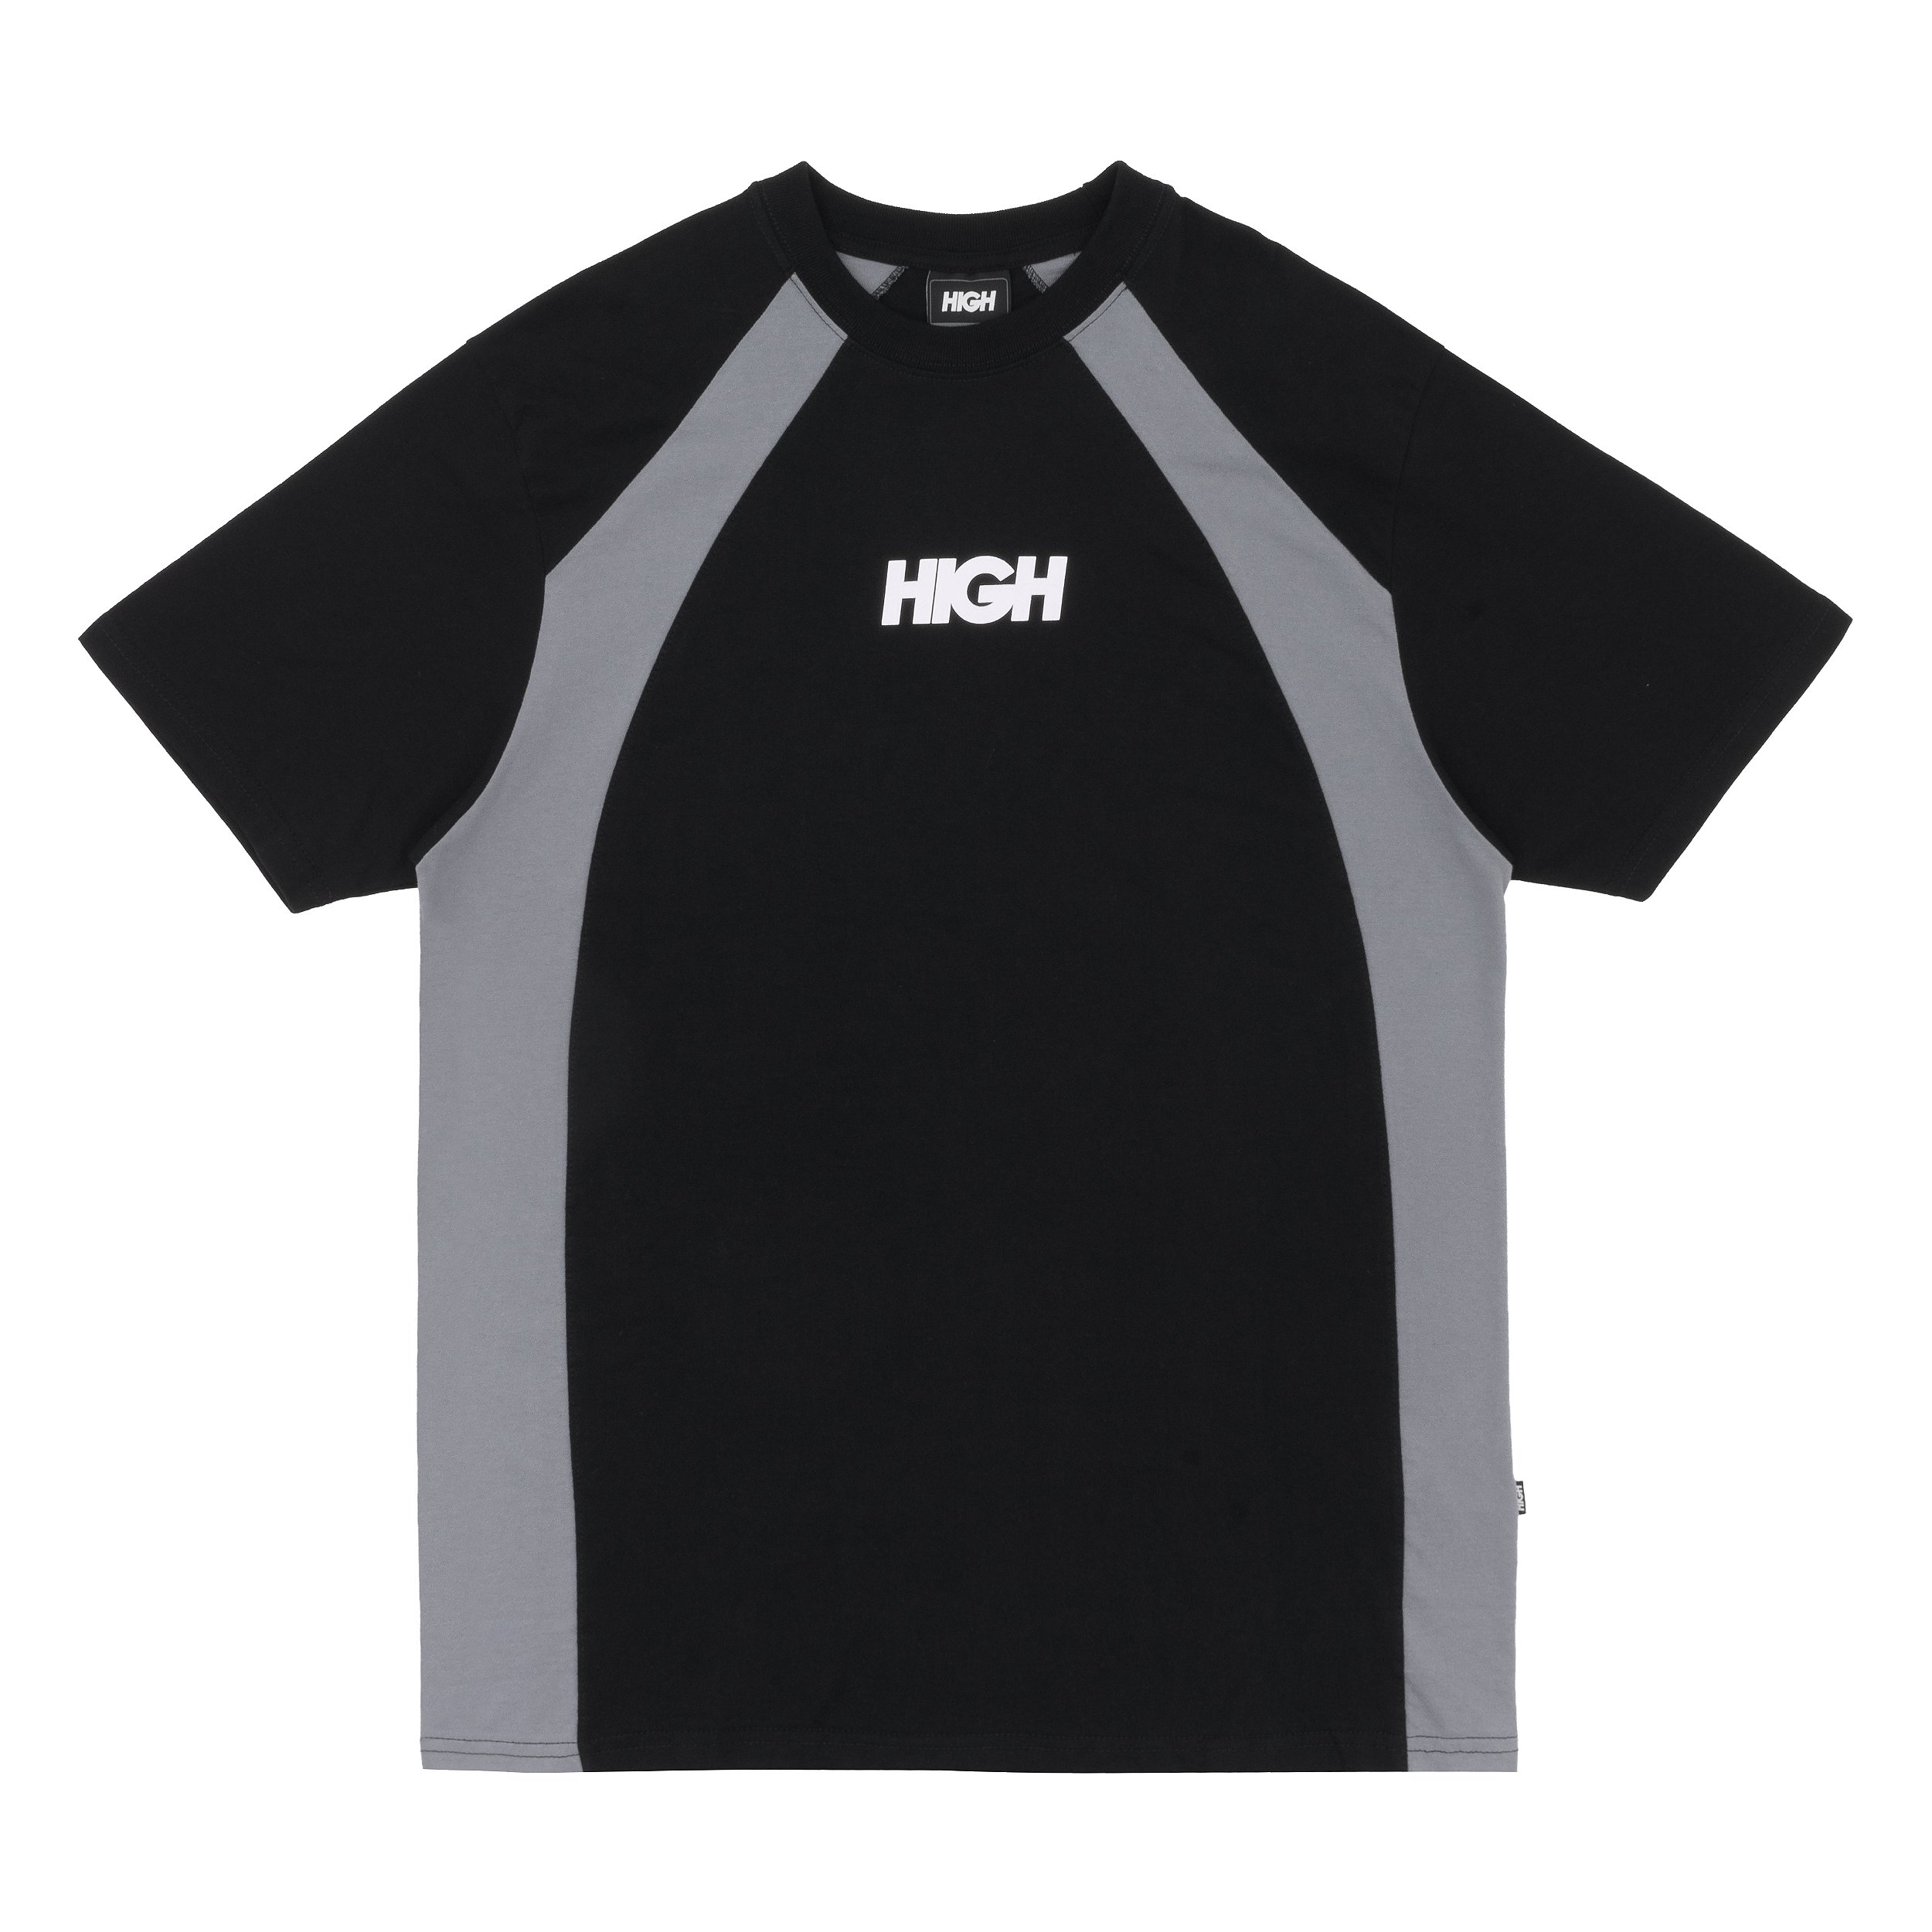 Camiseta High Reglan Lit Black - Overstreets